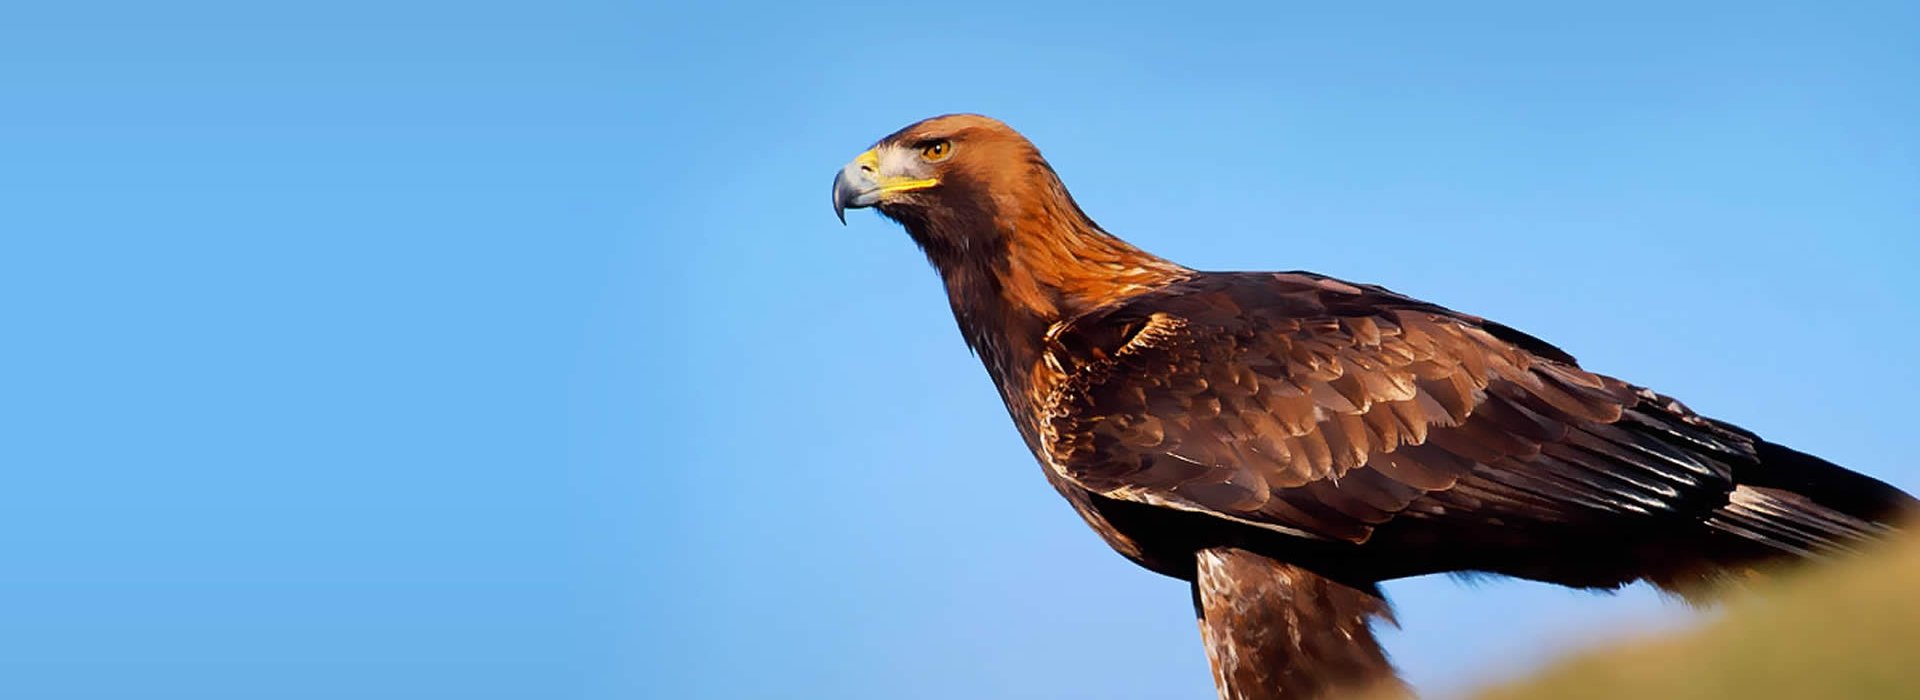 Male Golden Eagle